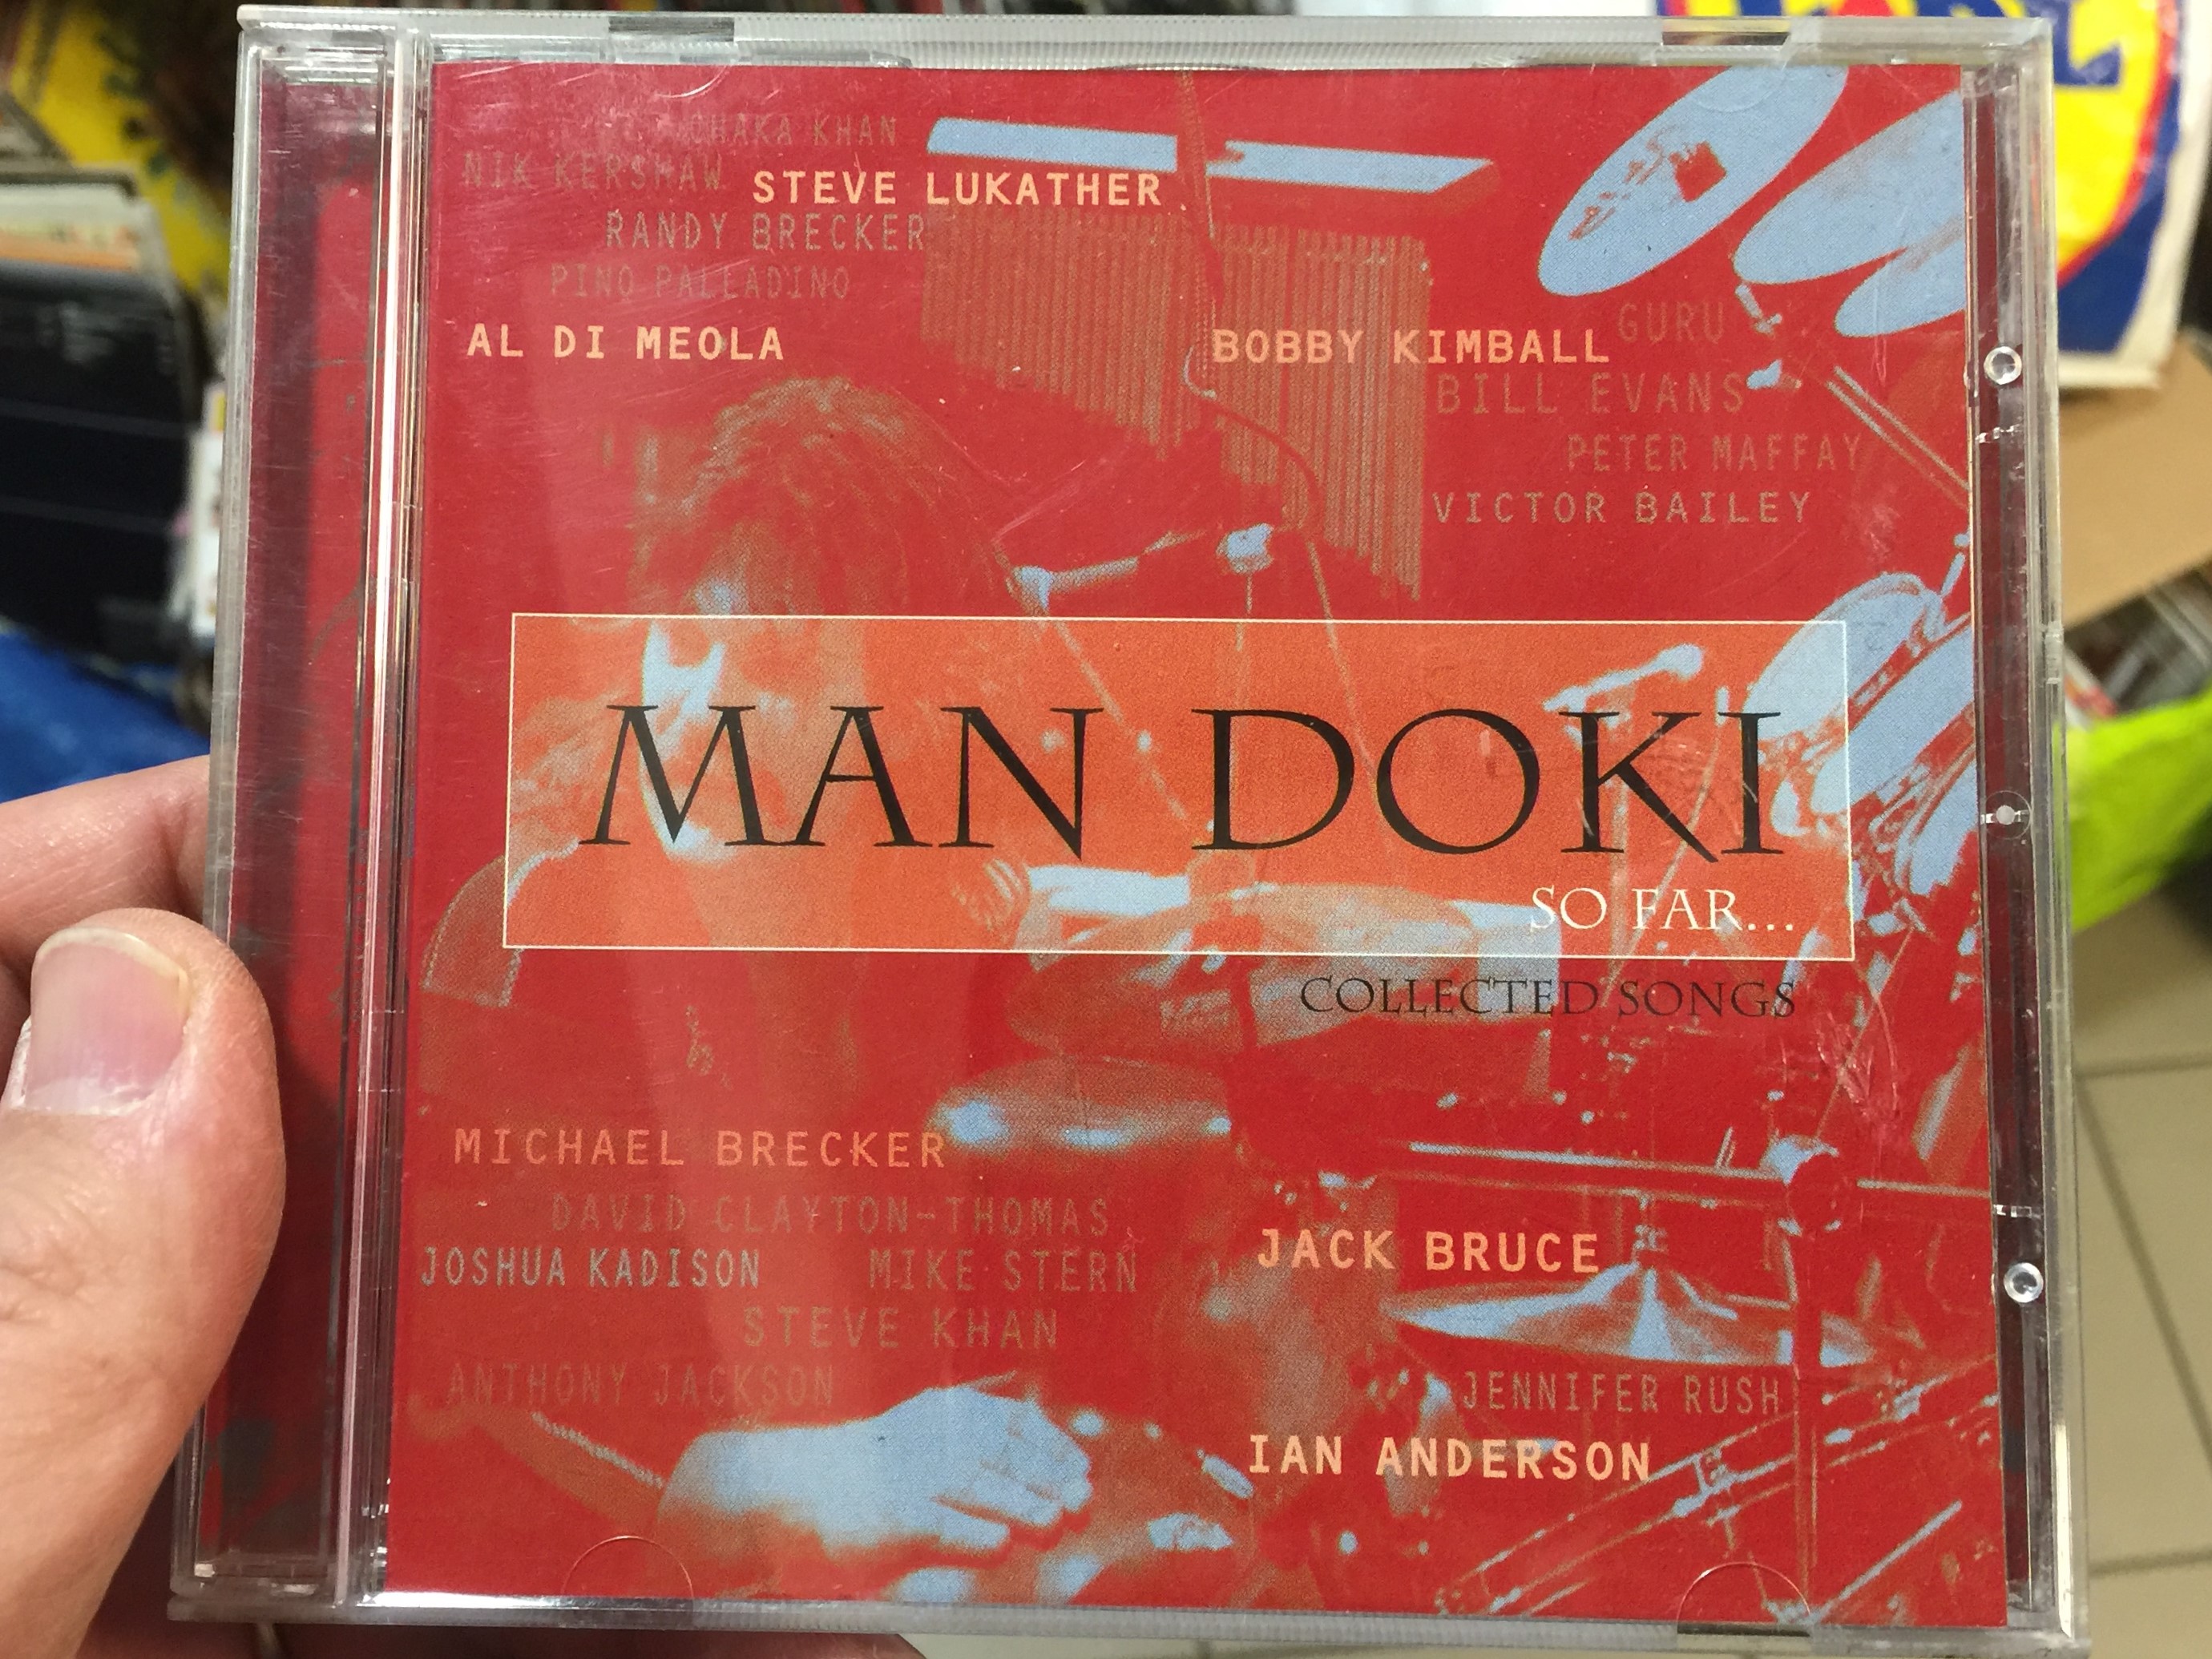 man-doki-so-far...collected-songs-edel-records-audio-cd-1998-0043712ere-1-.jpg